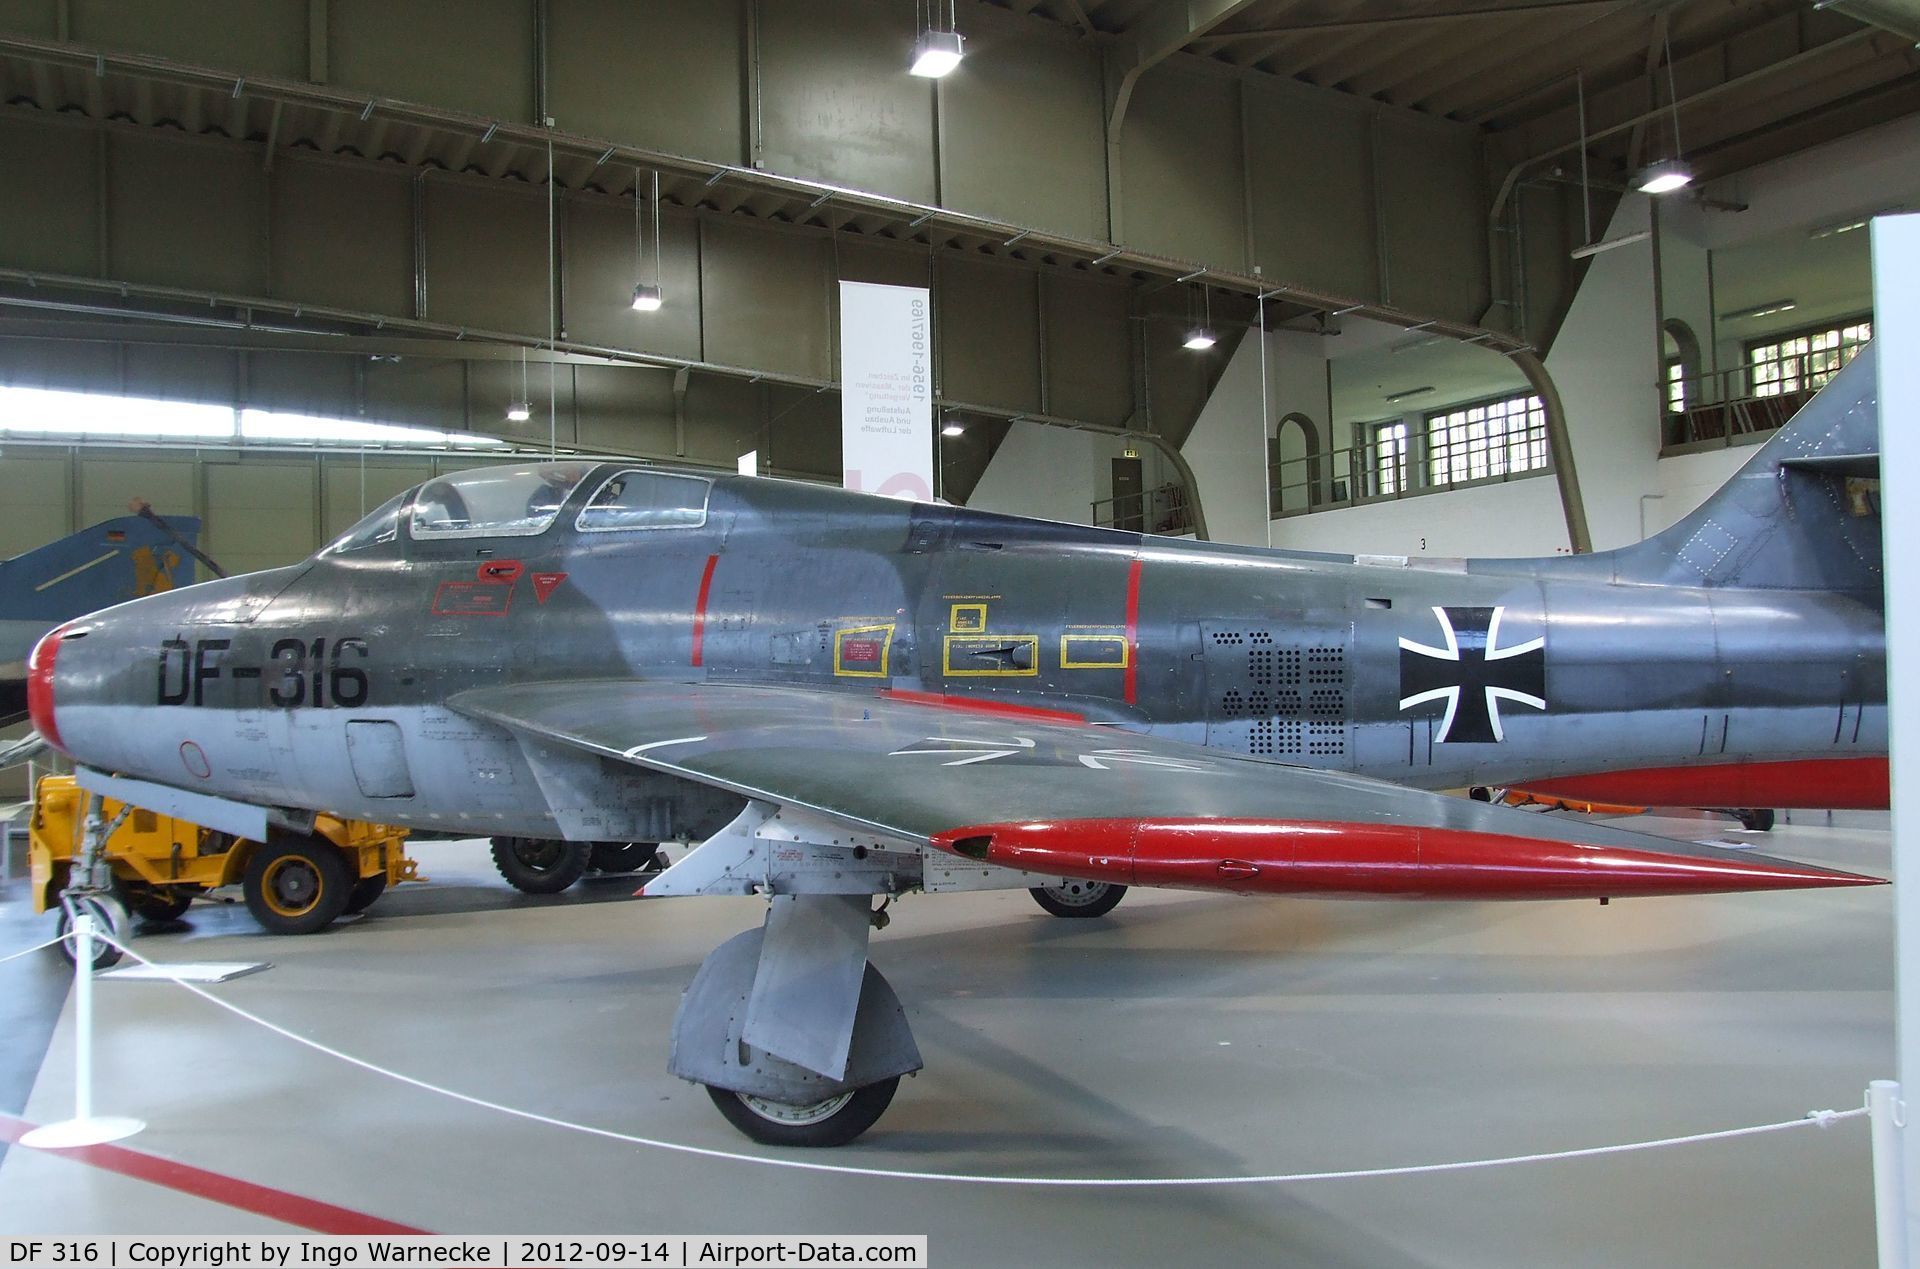 DF 316, 1954 Republic F-84F-76-RE Thunderstreak C/N Not found (53-7058/DF 316), Republic F-84F Thunderstreak at the Luftwaffenmuseum, Berlin-Gatow